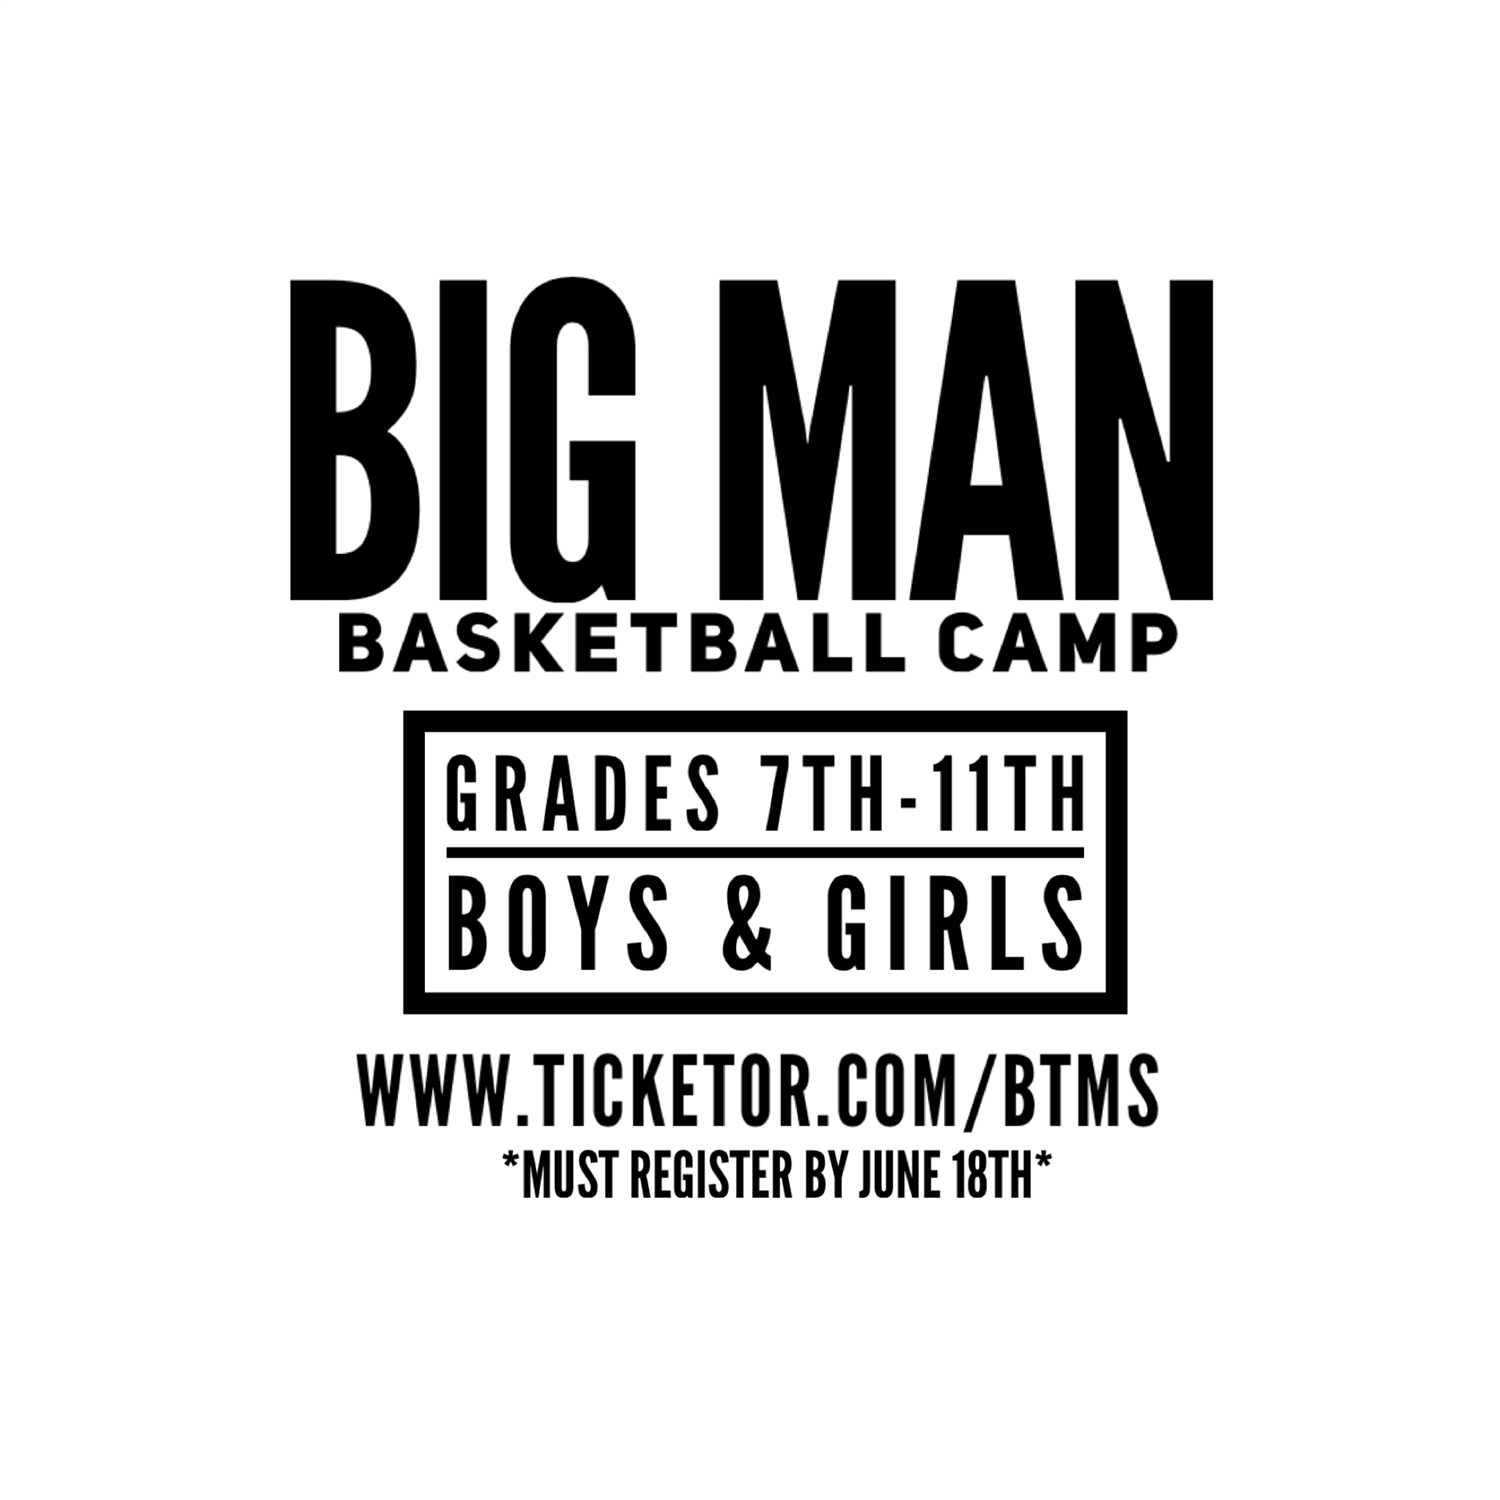 BIG MAN Basketball Camp Boys & Girls Grades 7th-11th on juin 19, 19:00@Moraine Valley - Achetez des billets et obtenez des informations surBTMS LLC 